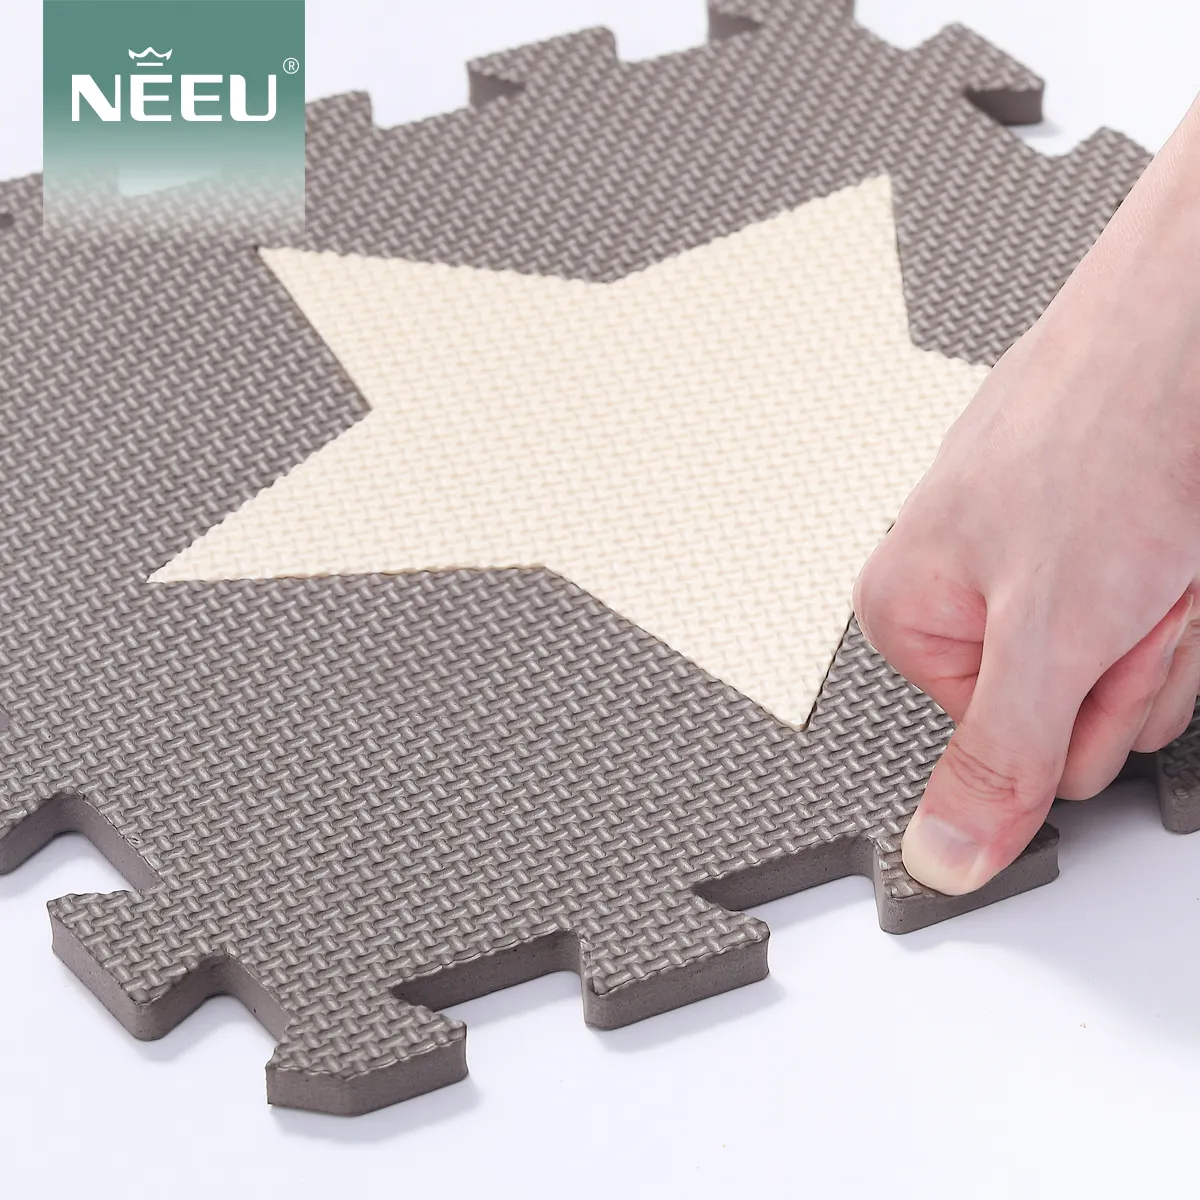 NEEU non toxic EVA material foam puzzle crawling mat for baby